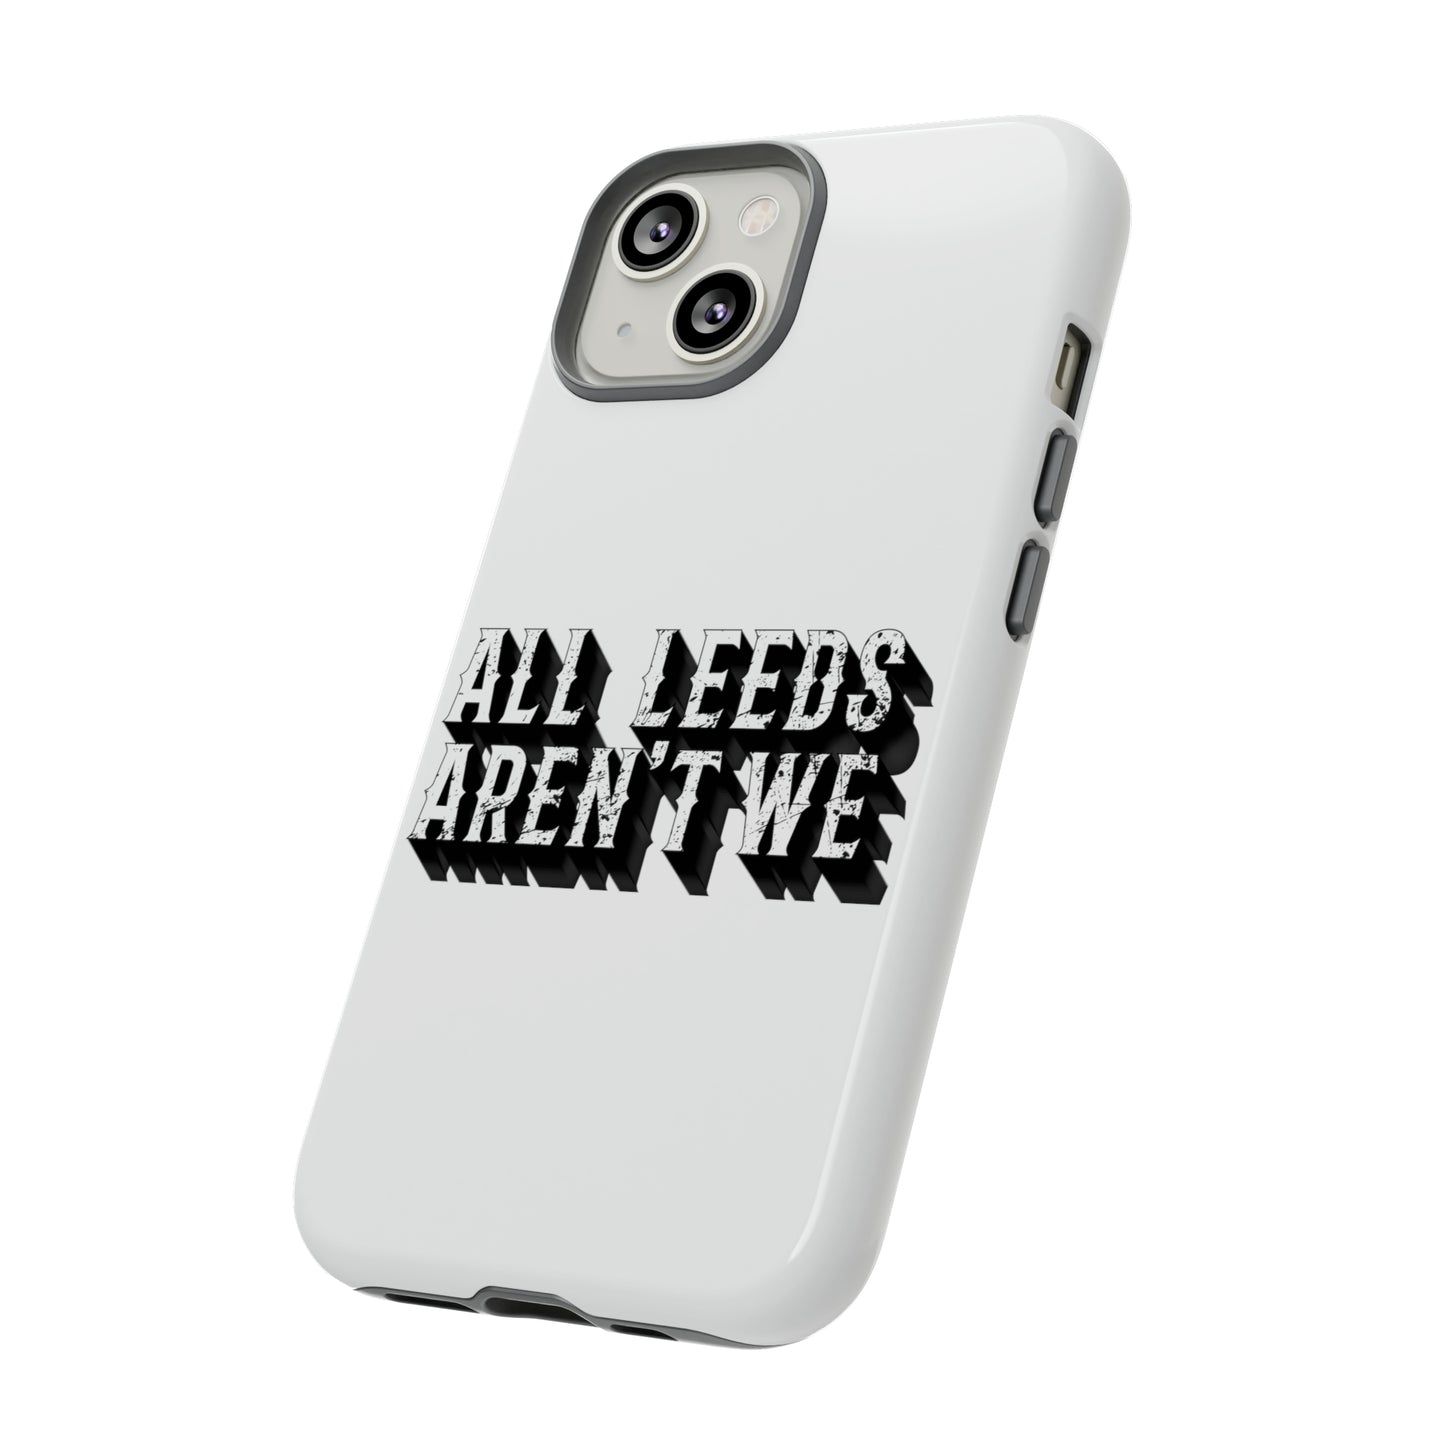 All Leeds Aren't We Tough Phone Case